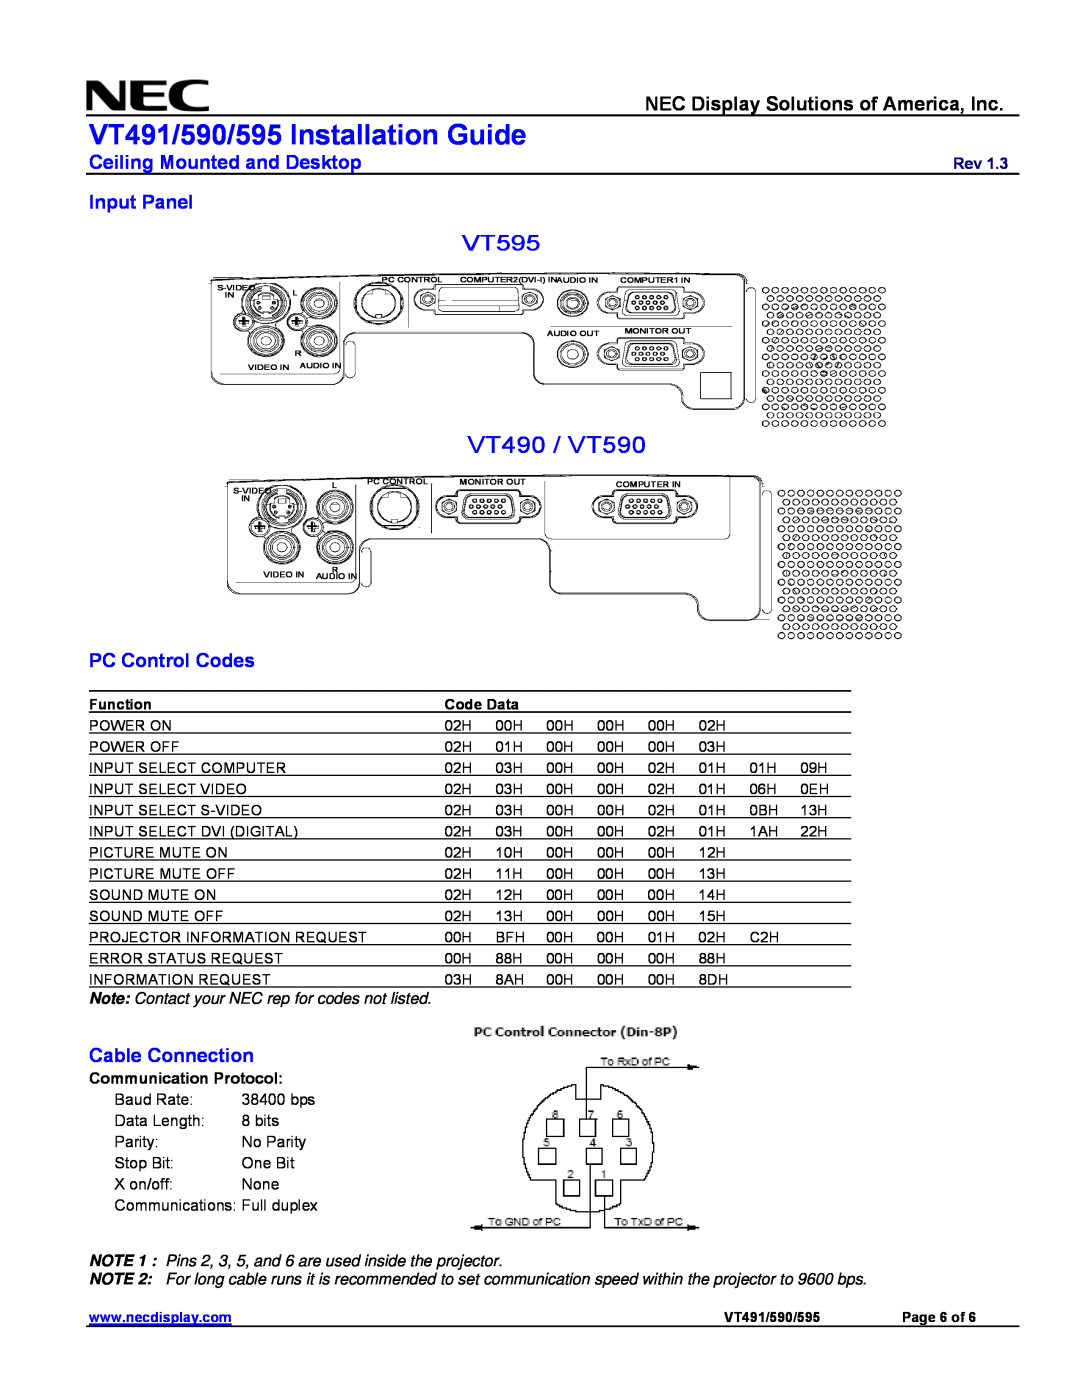 NEC VT491 NEC Display Solutions of America, Inc, Input Panel, PC Control Codes, Cable Connection, VT490 / VT590, VT595 